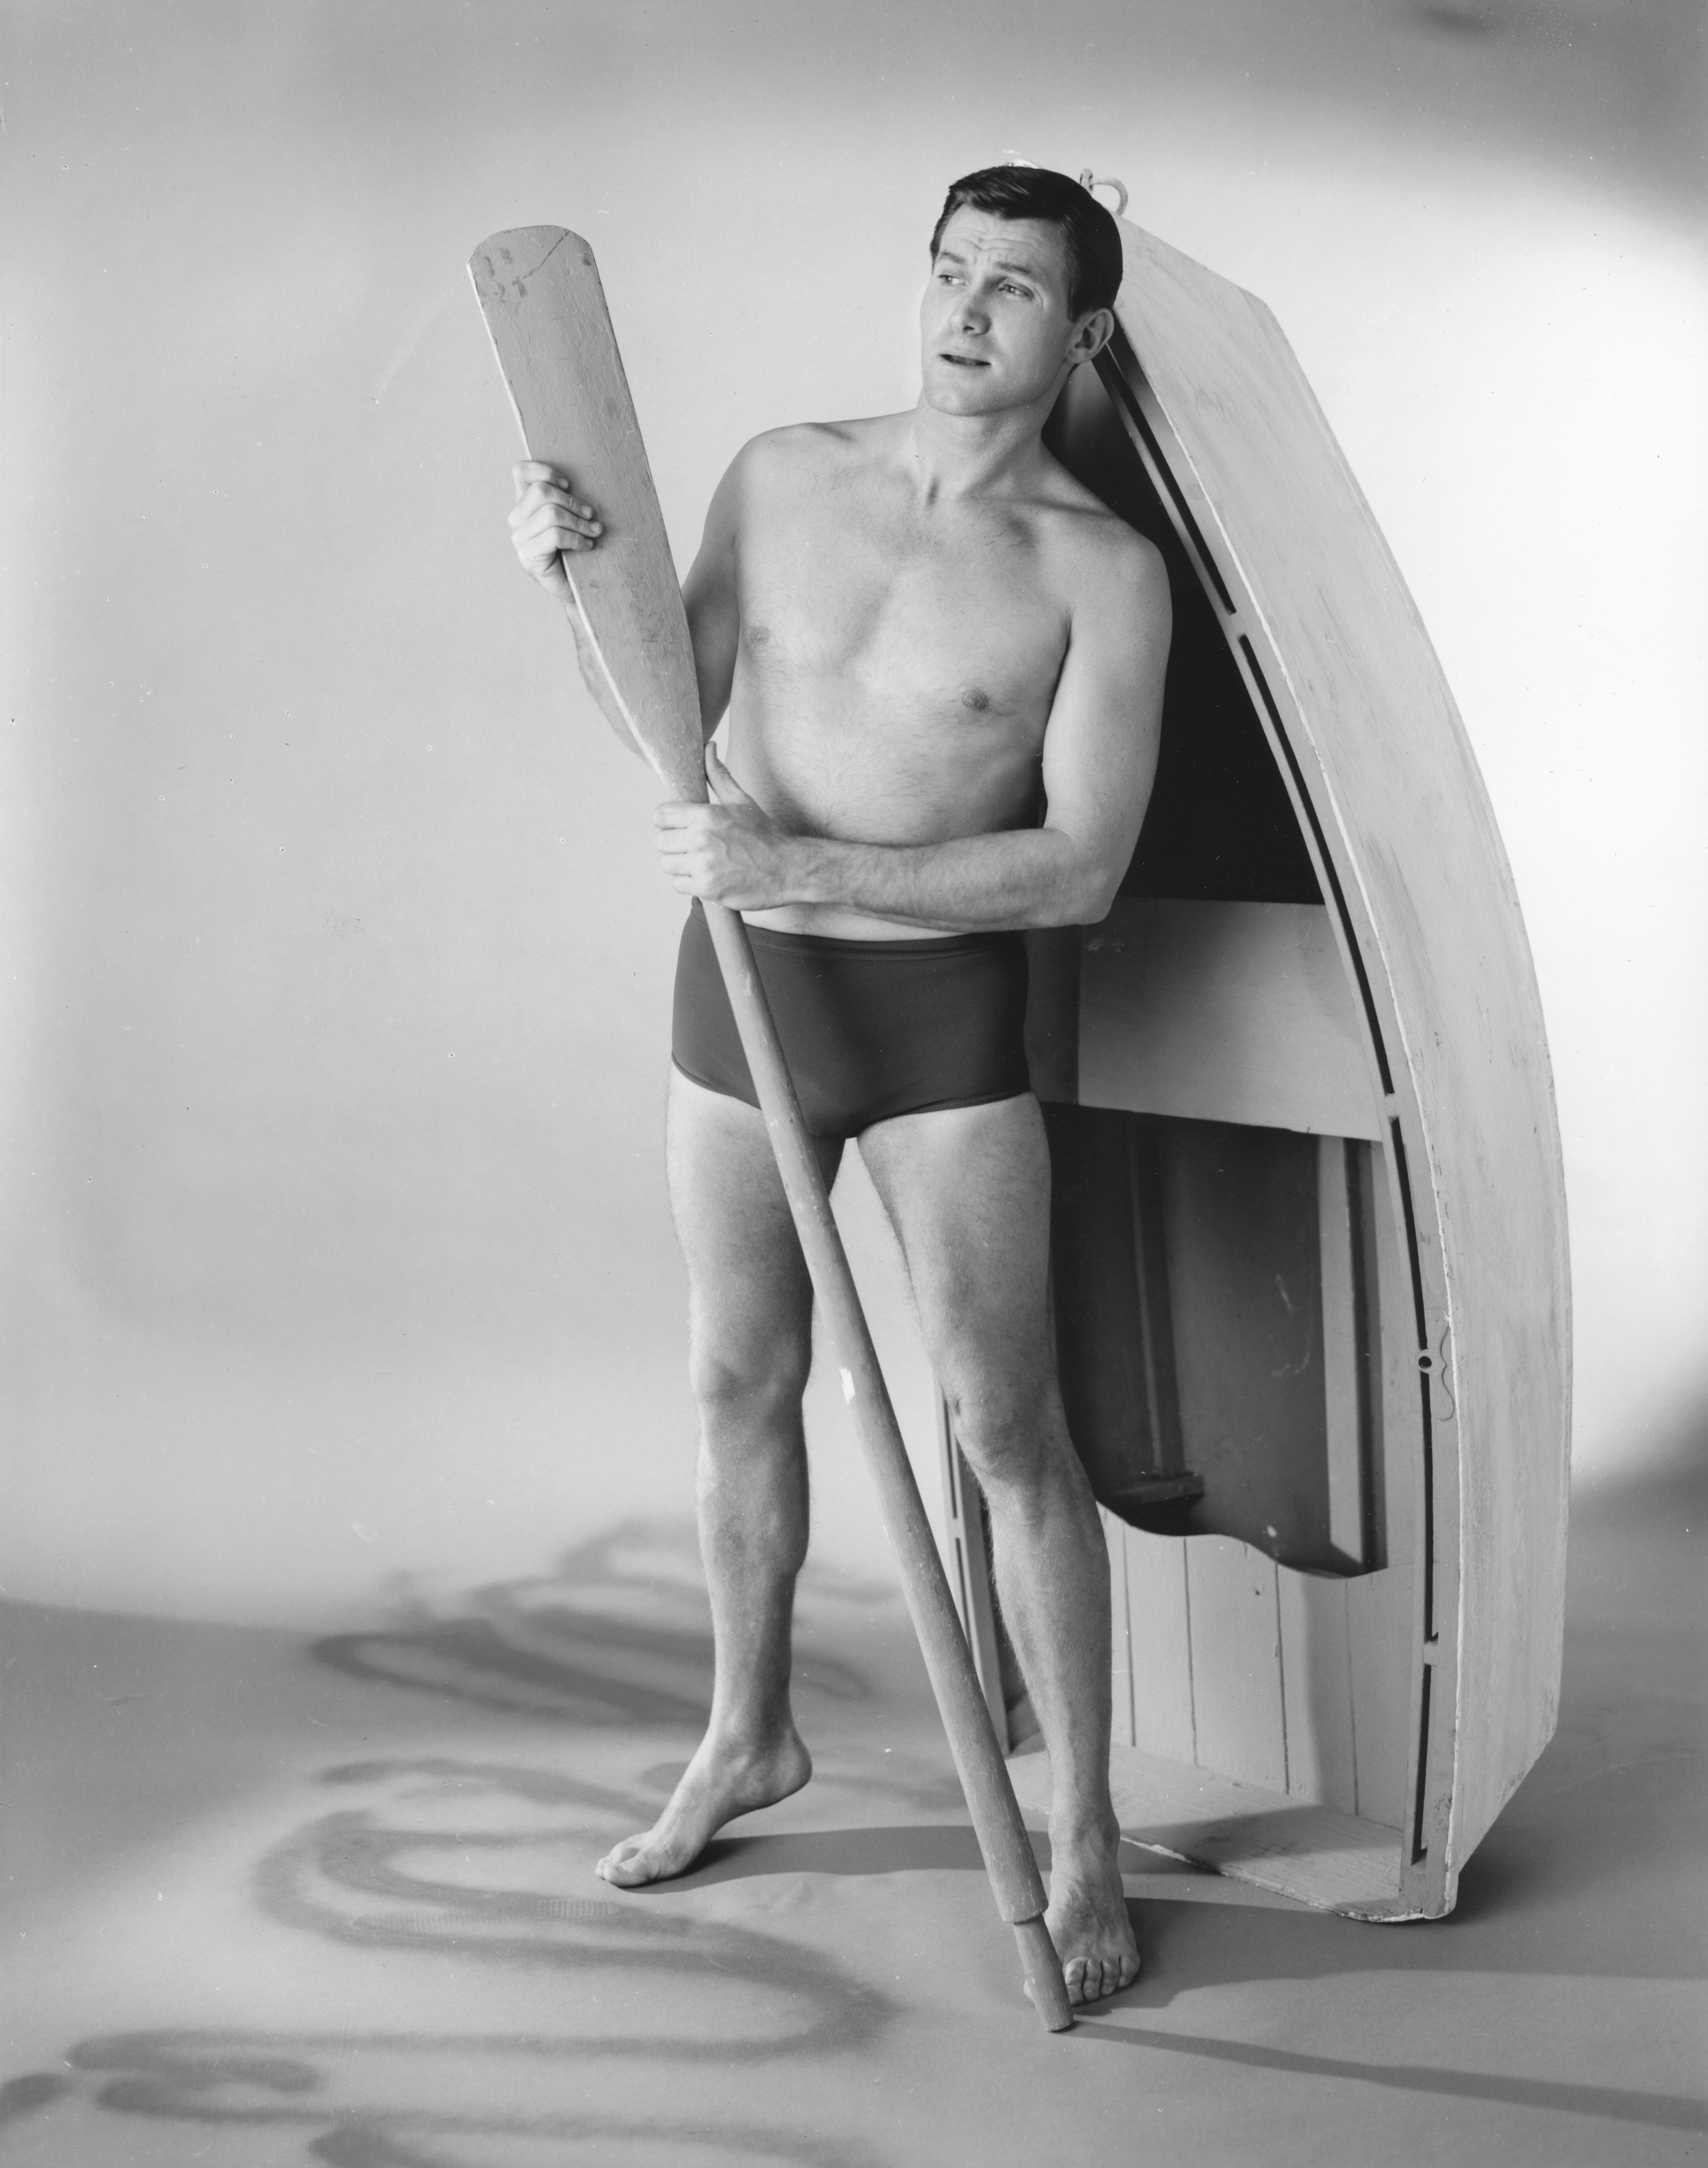 Black and white fashion photograph advertising 1960s era Ban-Lon swim trunks